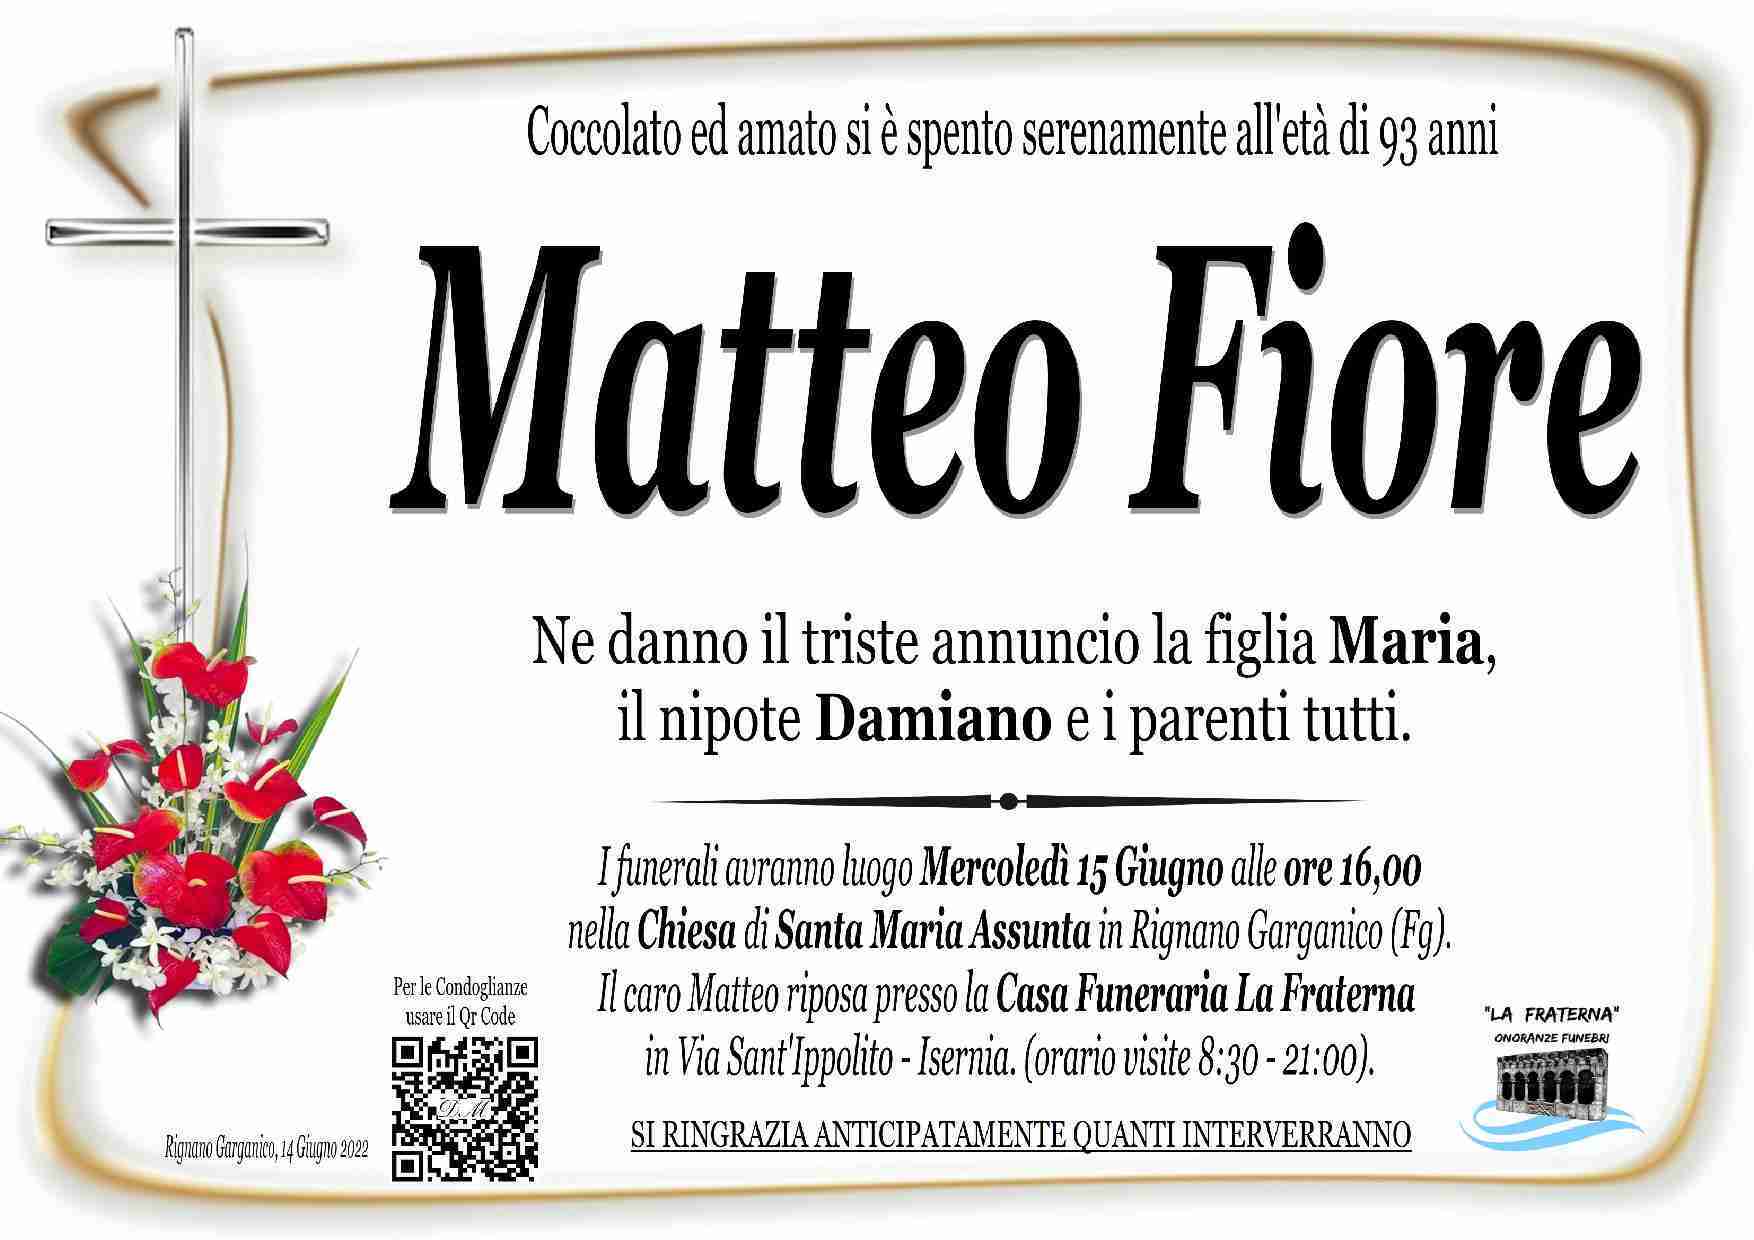 Matteo Fiore